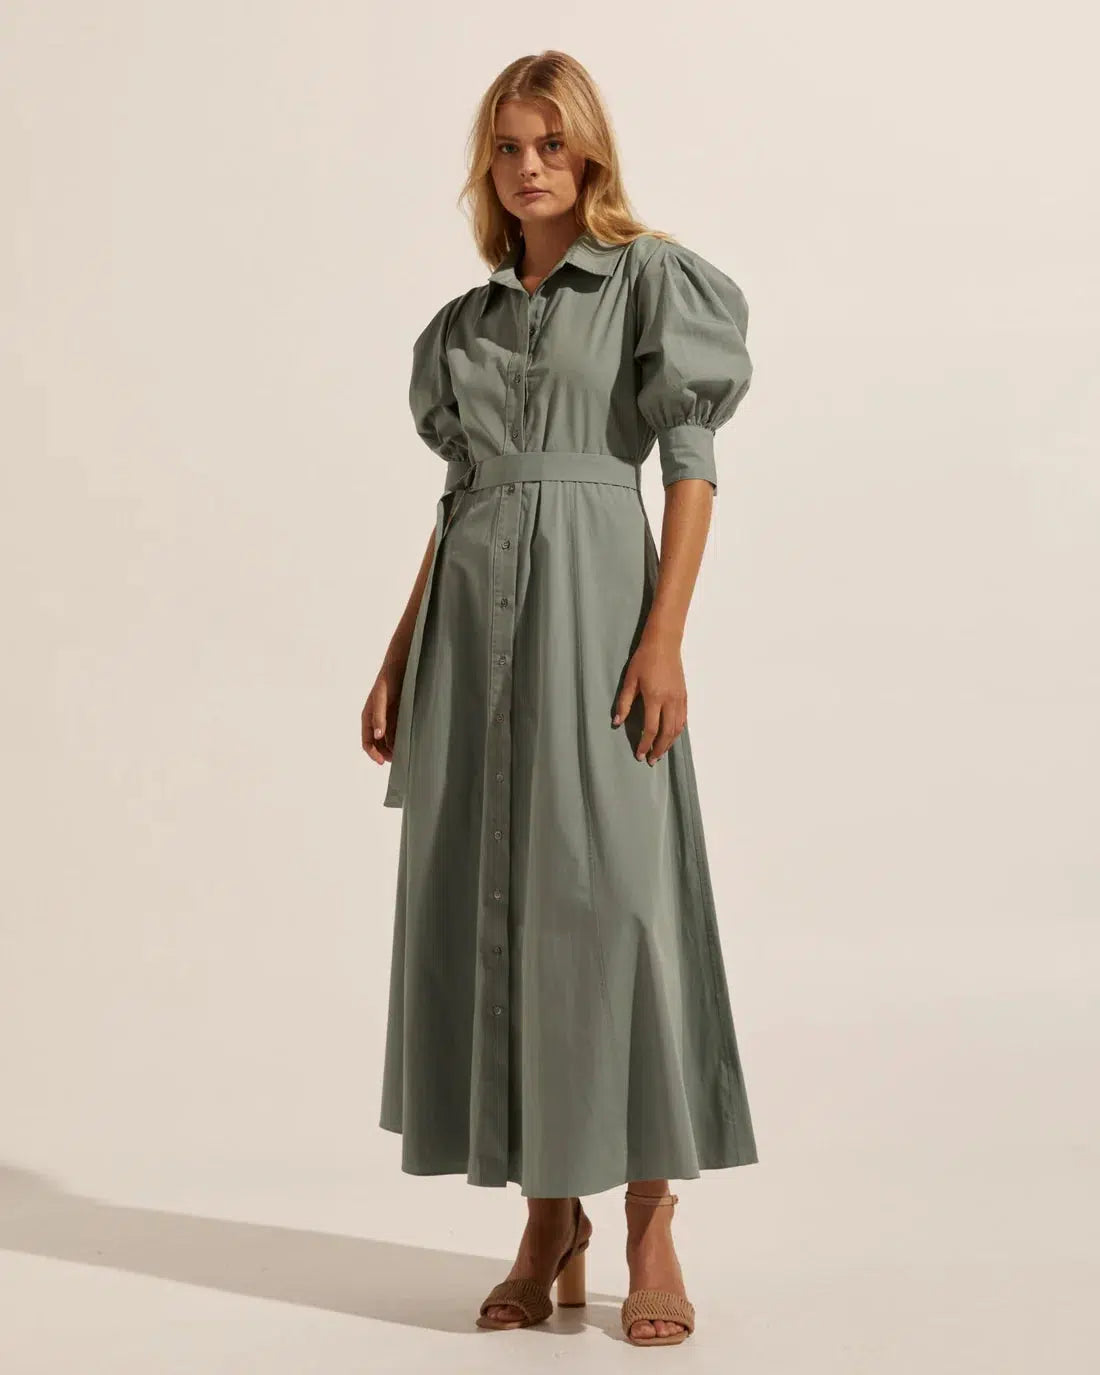 Favour Dress - Sage-Zoe Kratzmann-Lima & Co